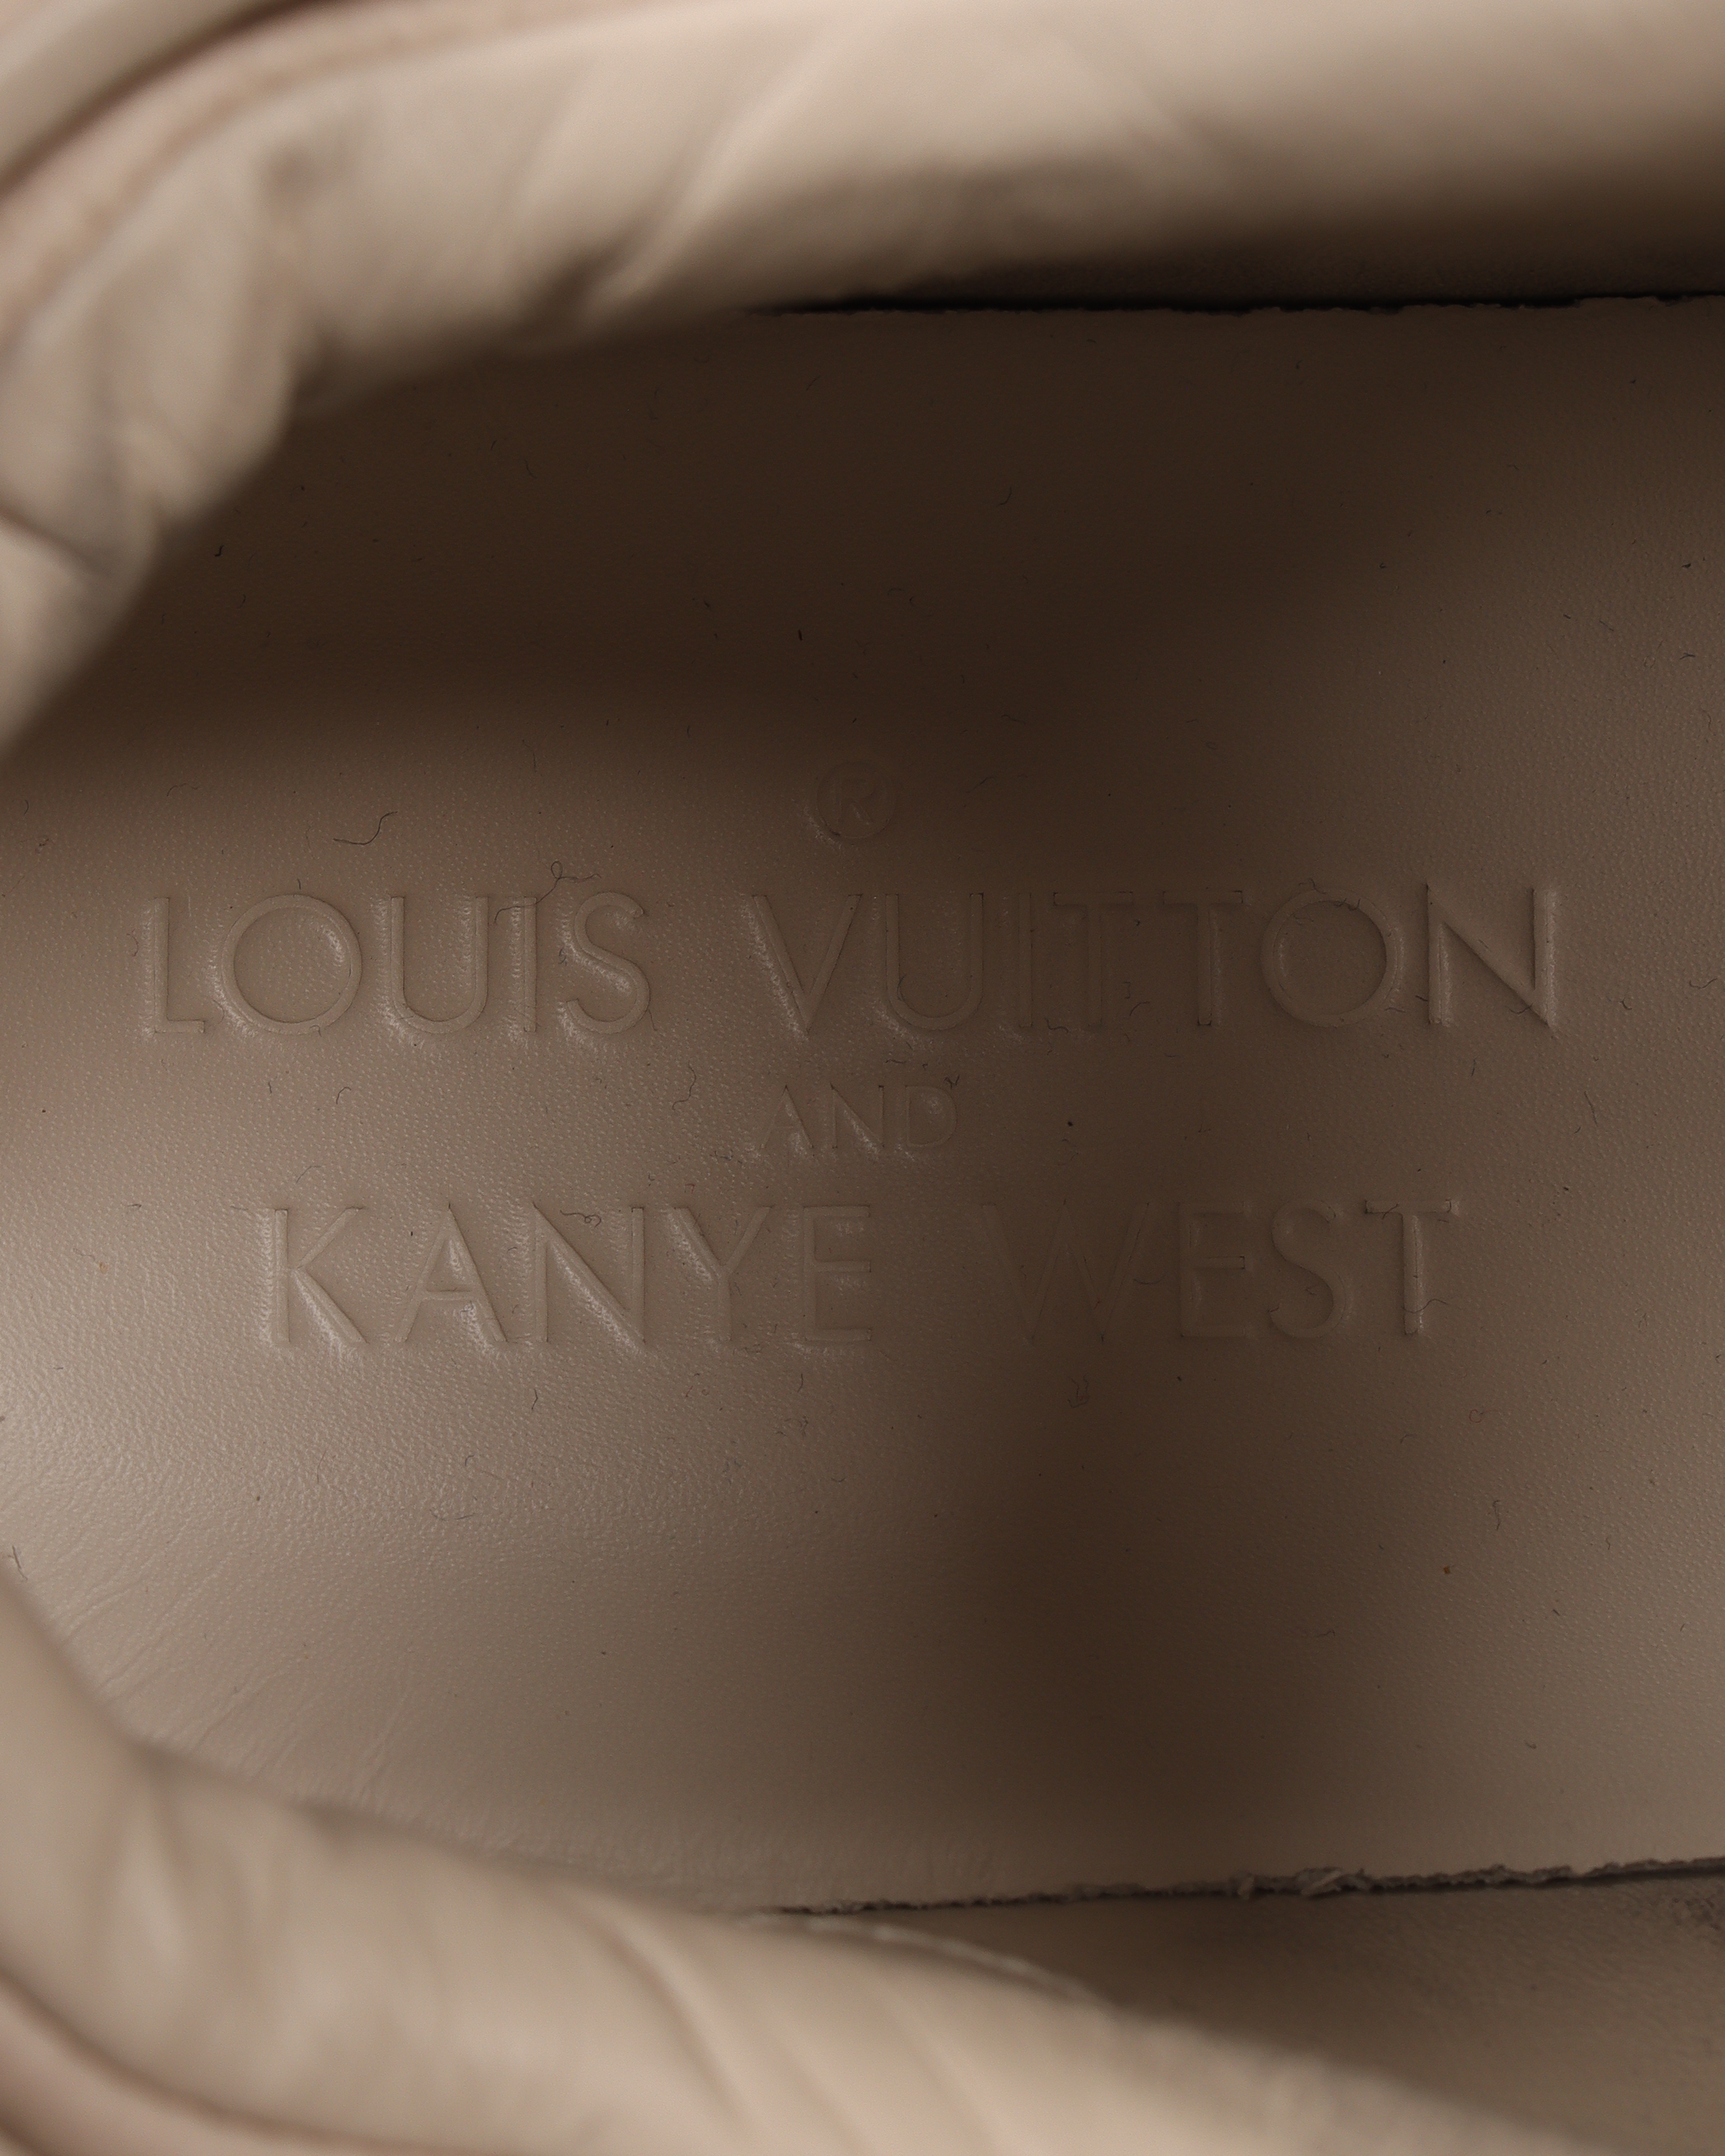 Louis Vuitton Don Kanye Cream – Mad Kicks